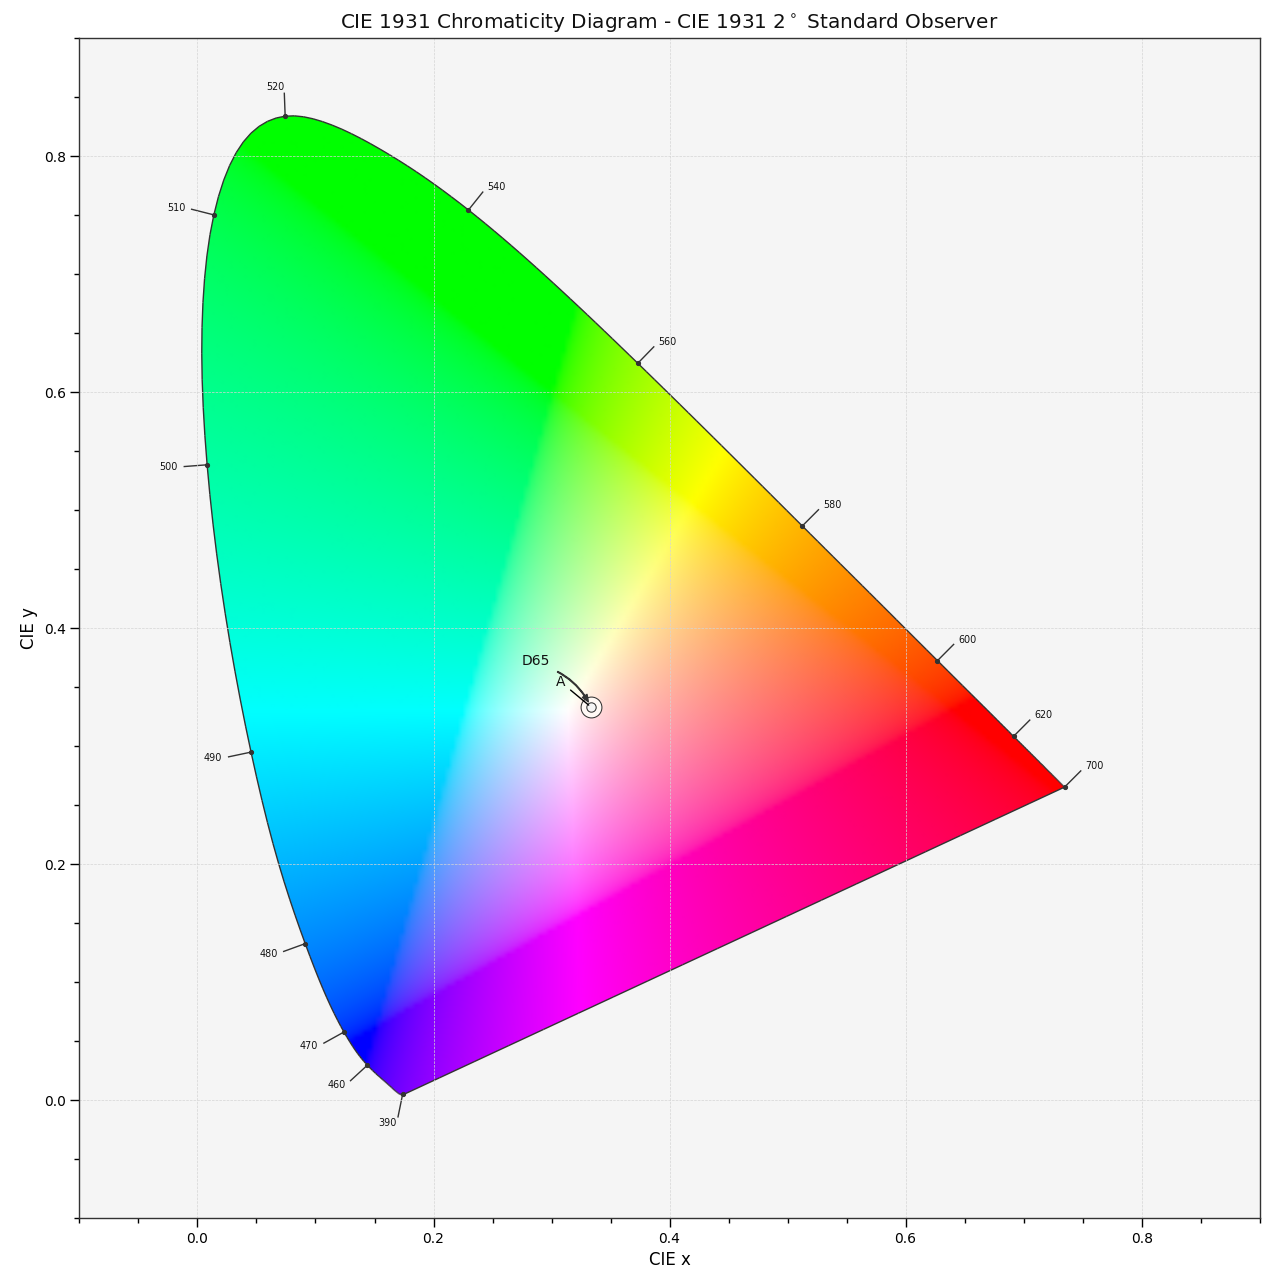 plot_sds_in_chromaticity_diagram